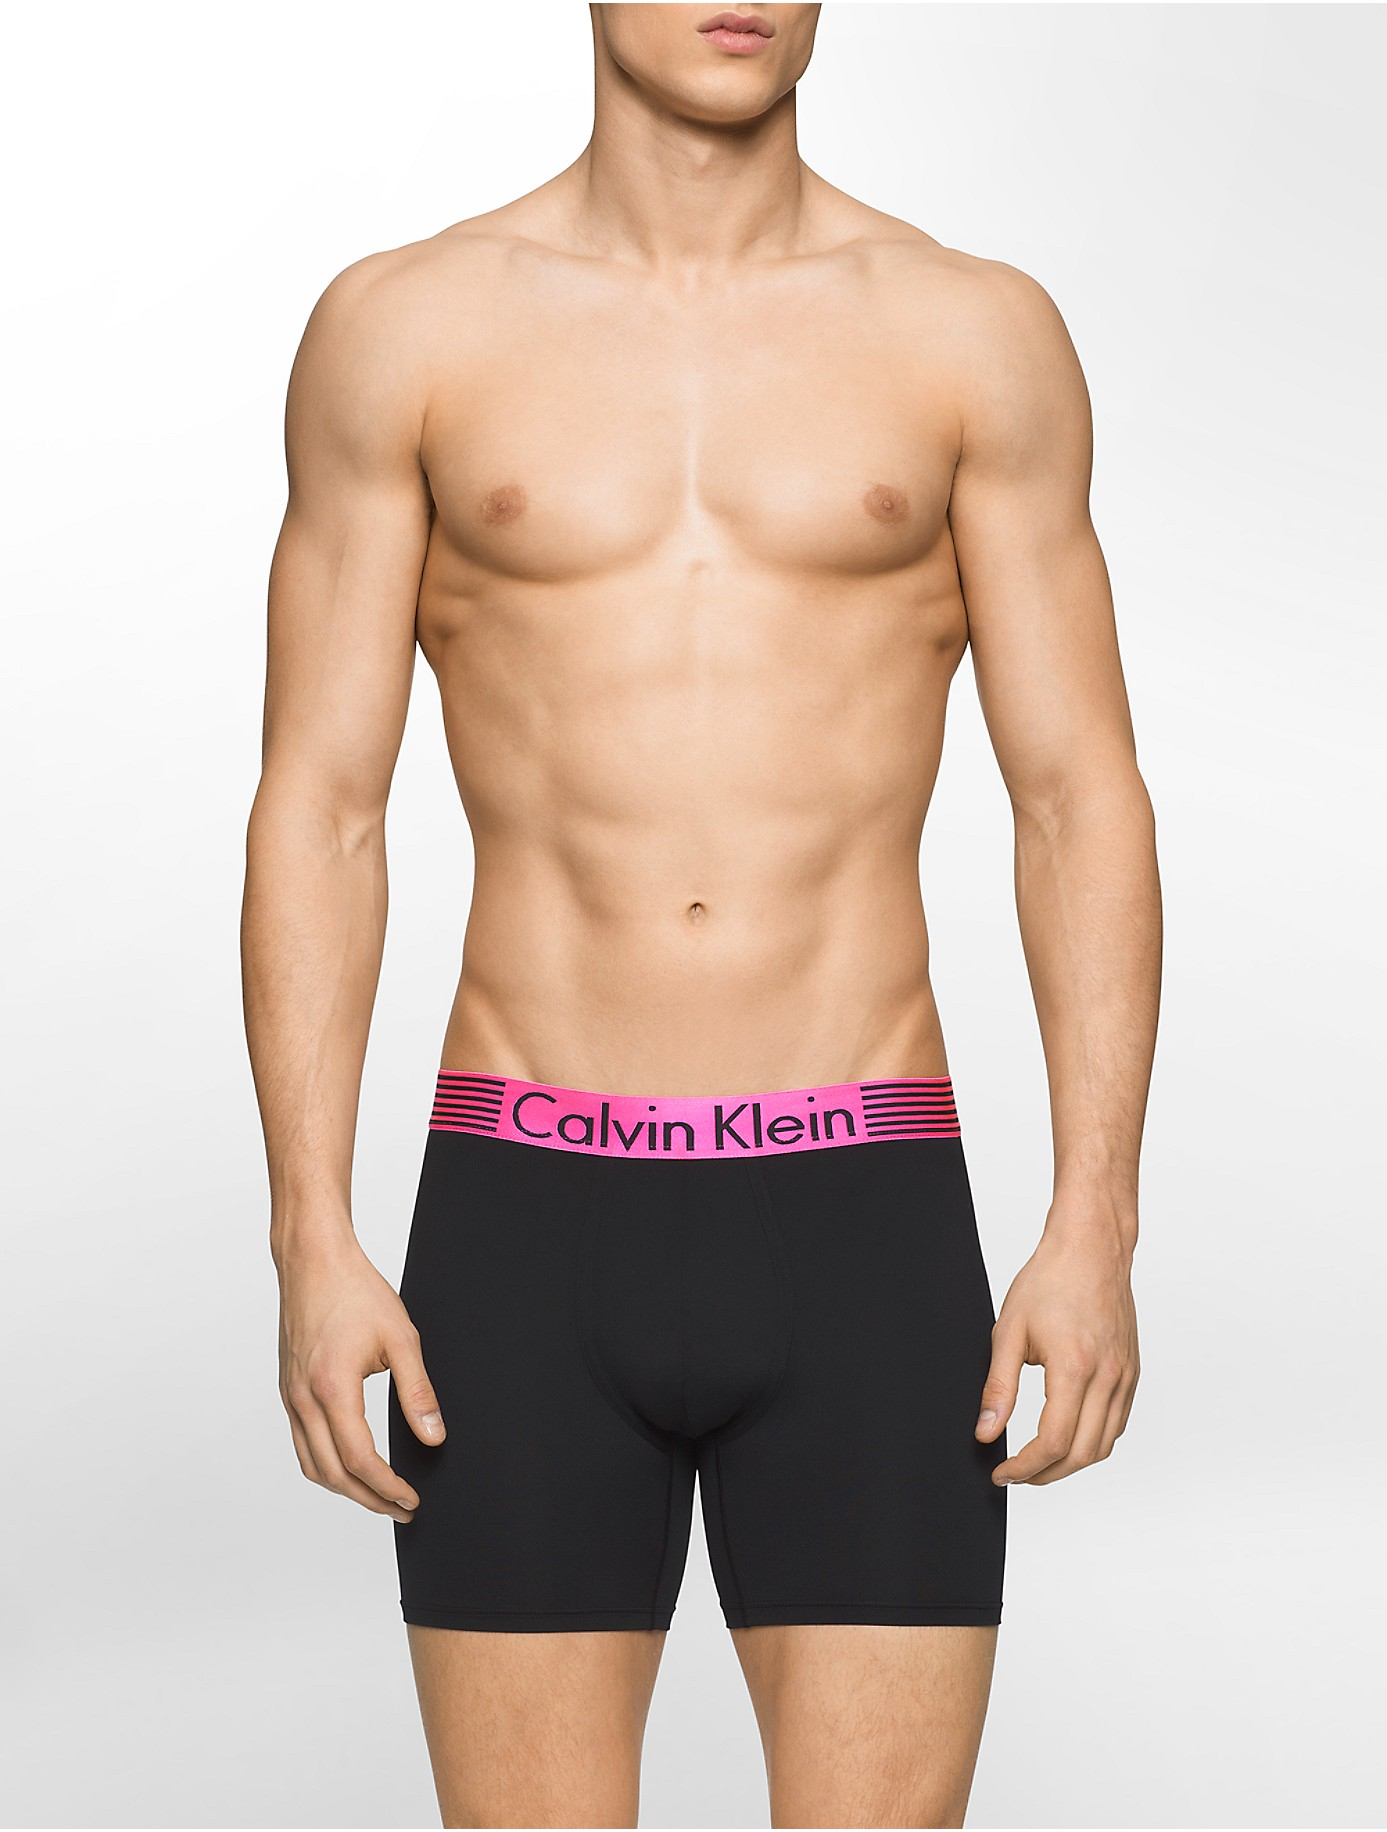 Calvin Klein Synthetic Underwear Iron Strength Micro Boxer Brief in Black  for Men - Lyst